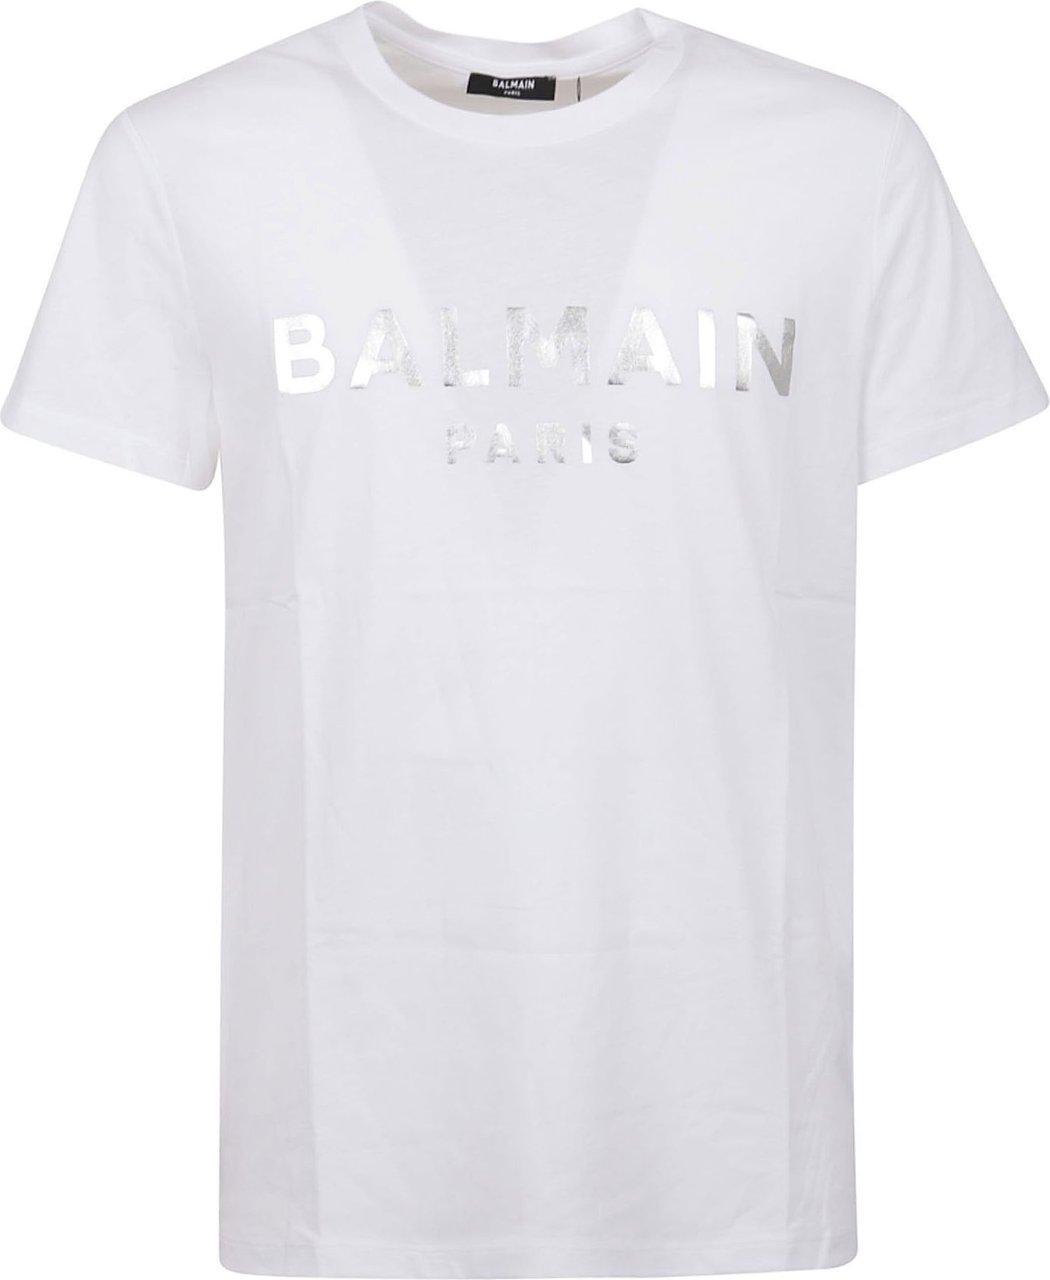 Balmain balmain foil tshirt classic fit Wit